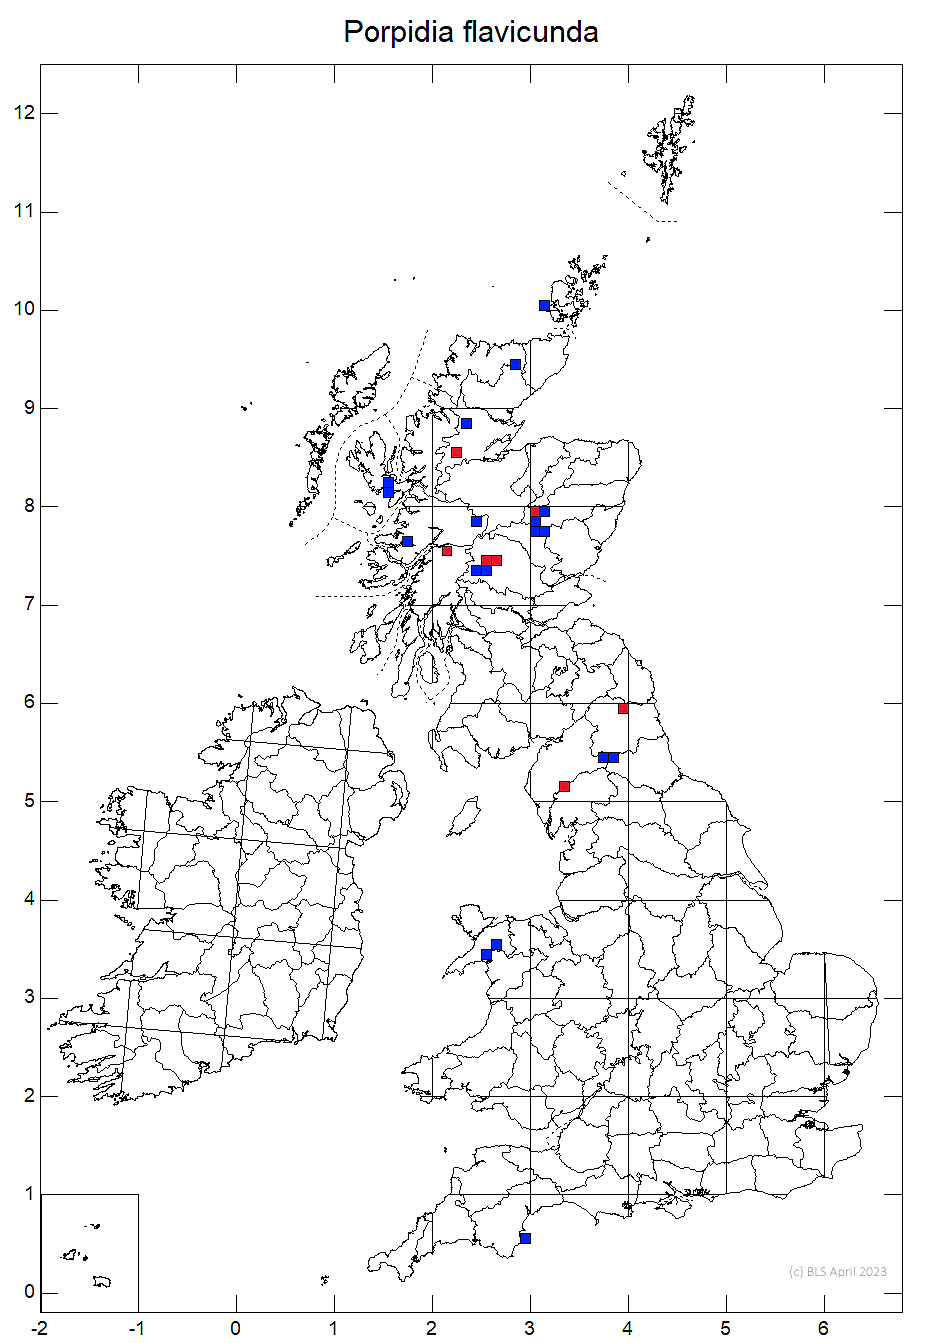 Porpidia flavicunda 10km sq distribution map